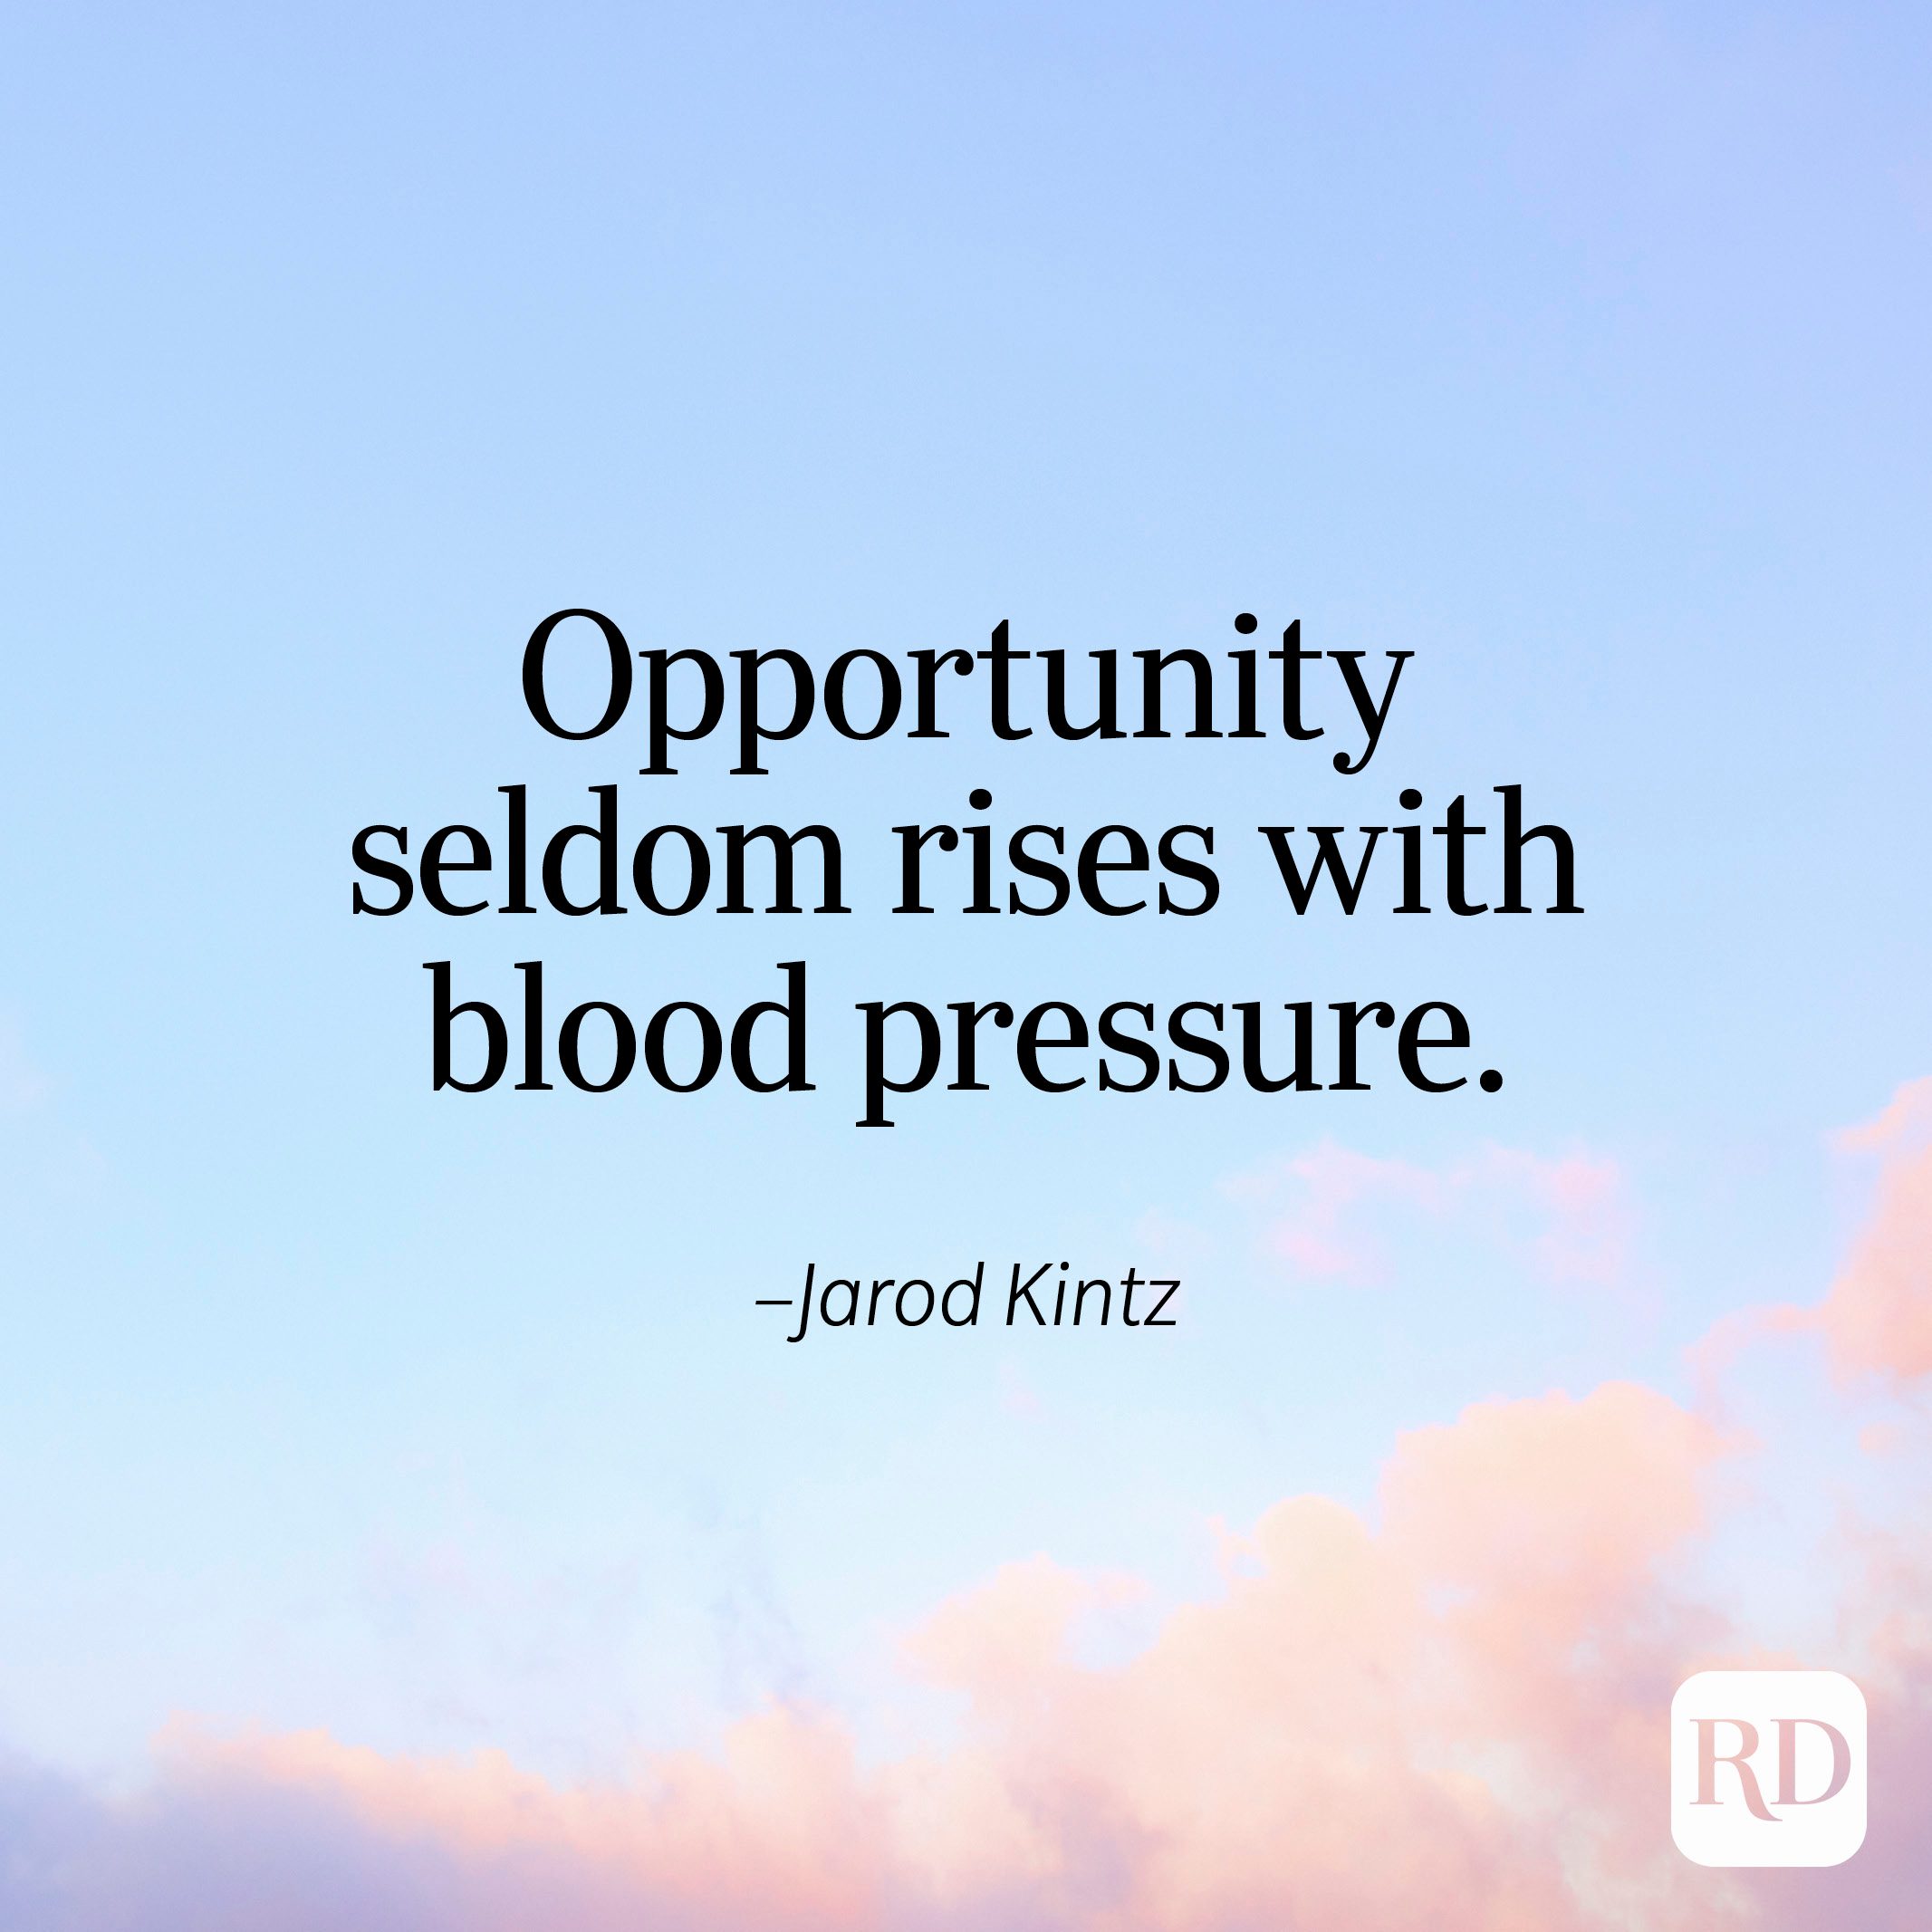 "Opportunity seldom rises with blood pressure." —Jarod Kintz